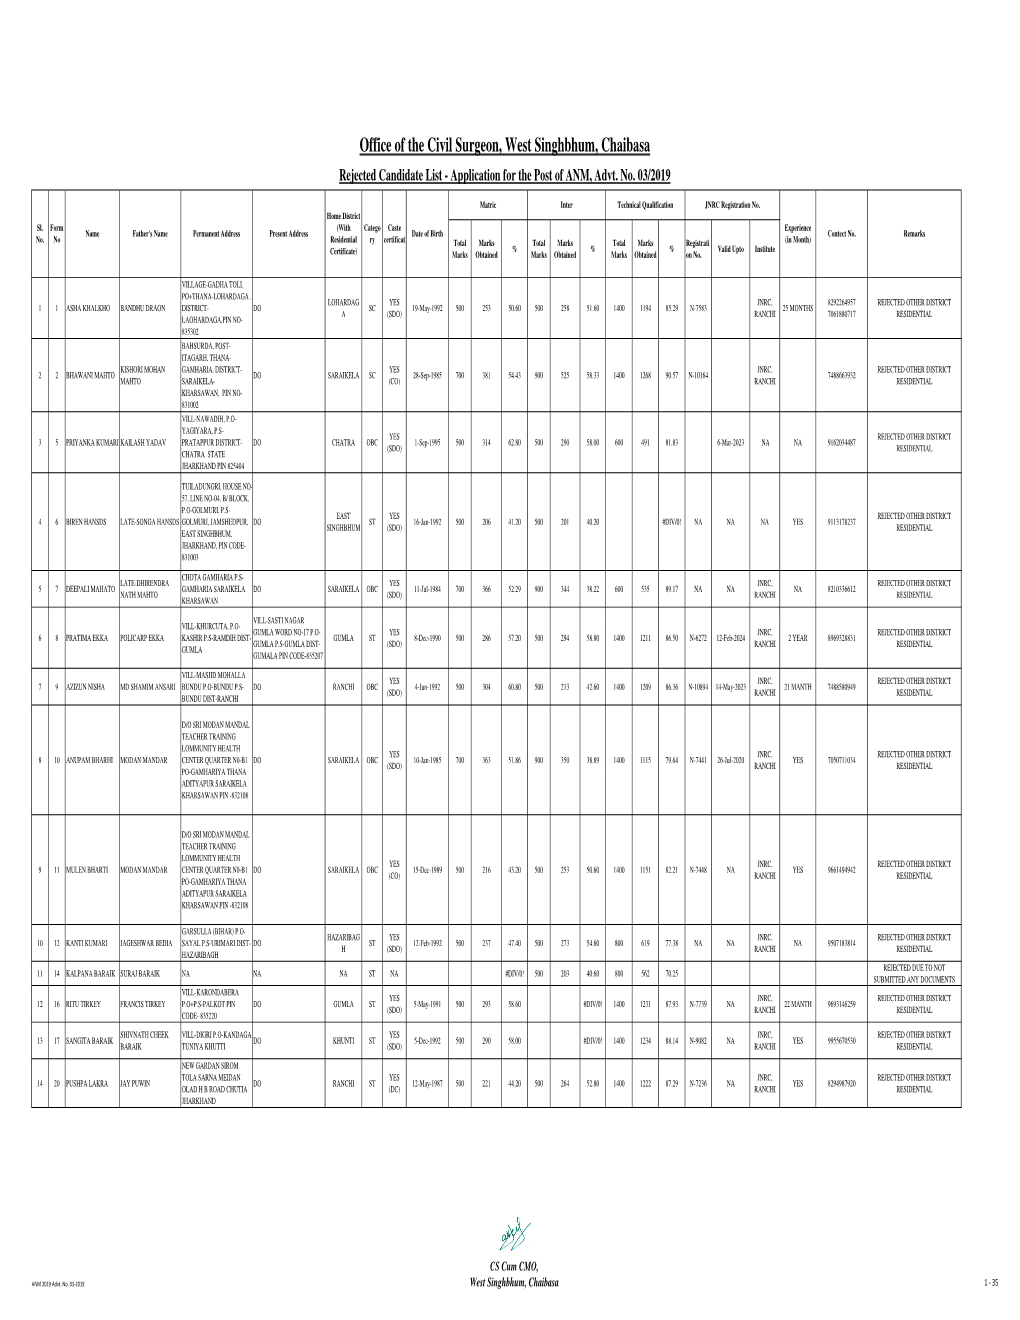 ANM 2019 Advt. No. 03-2019 West Singhbhum, Chaibasa 1 - 35 Matric Inter Technical Qualification JNRC Registration No